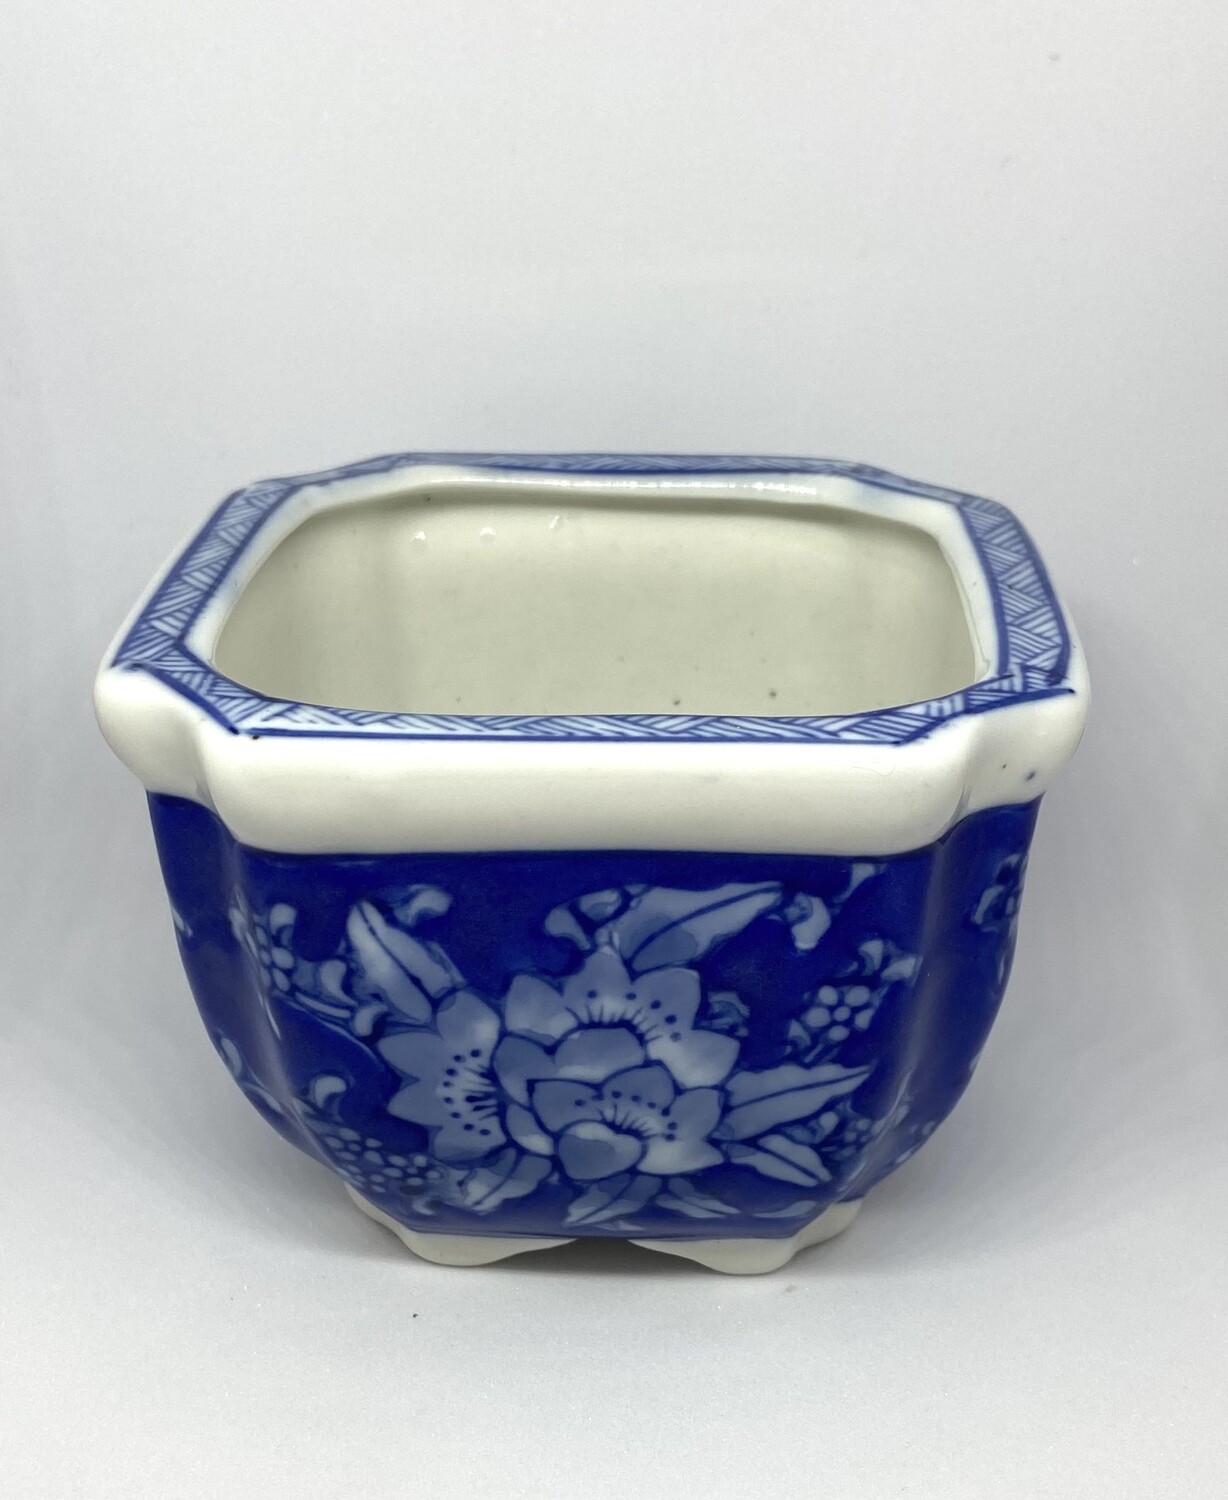 Blue and White Square Ceramic Planter 3” Tall